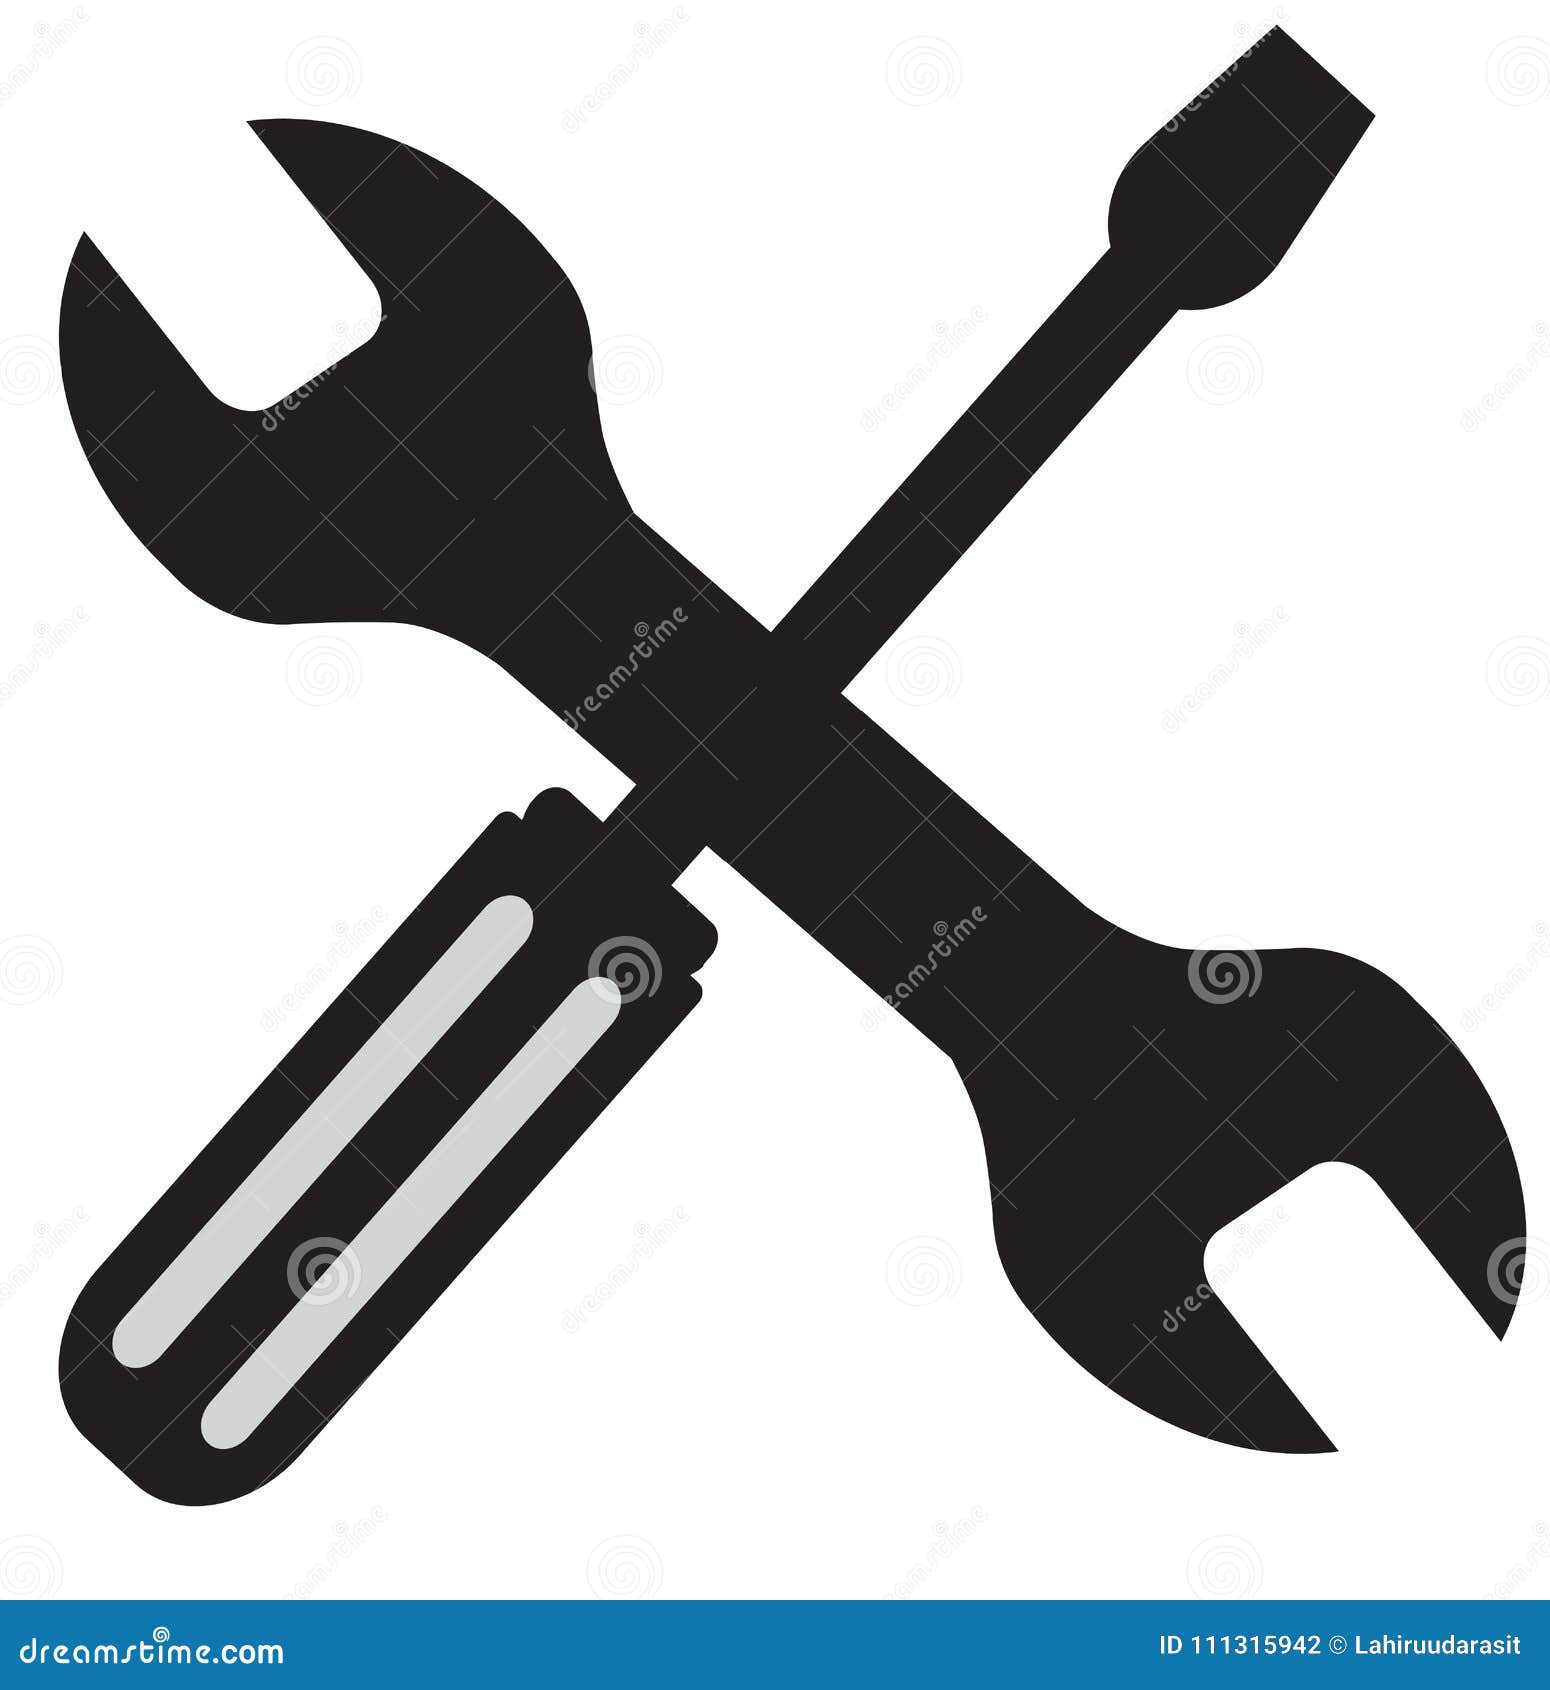 tool icon silhouette